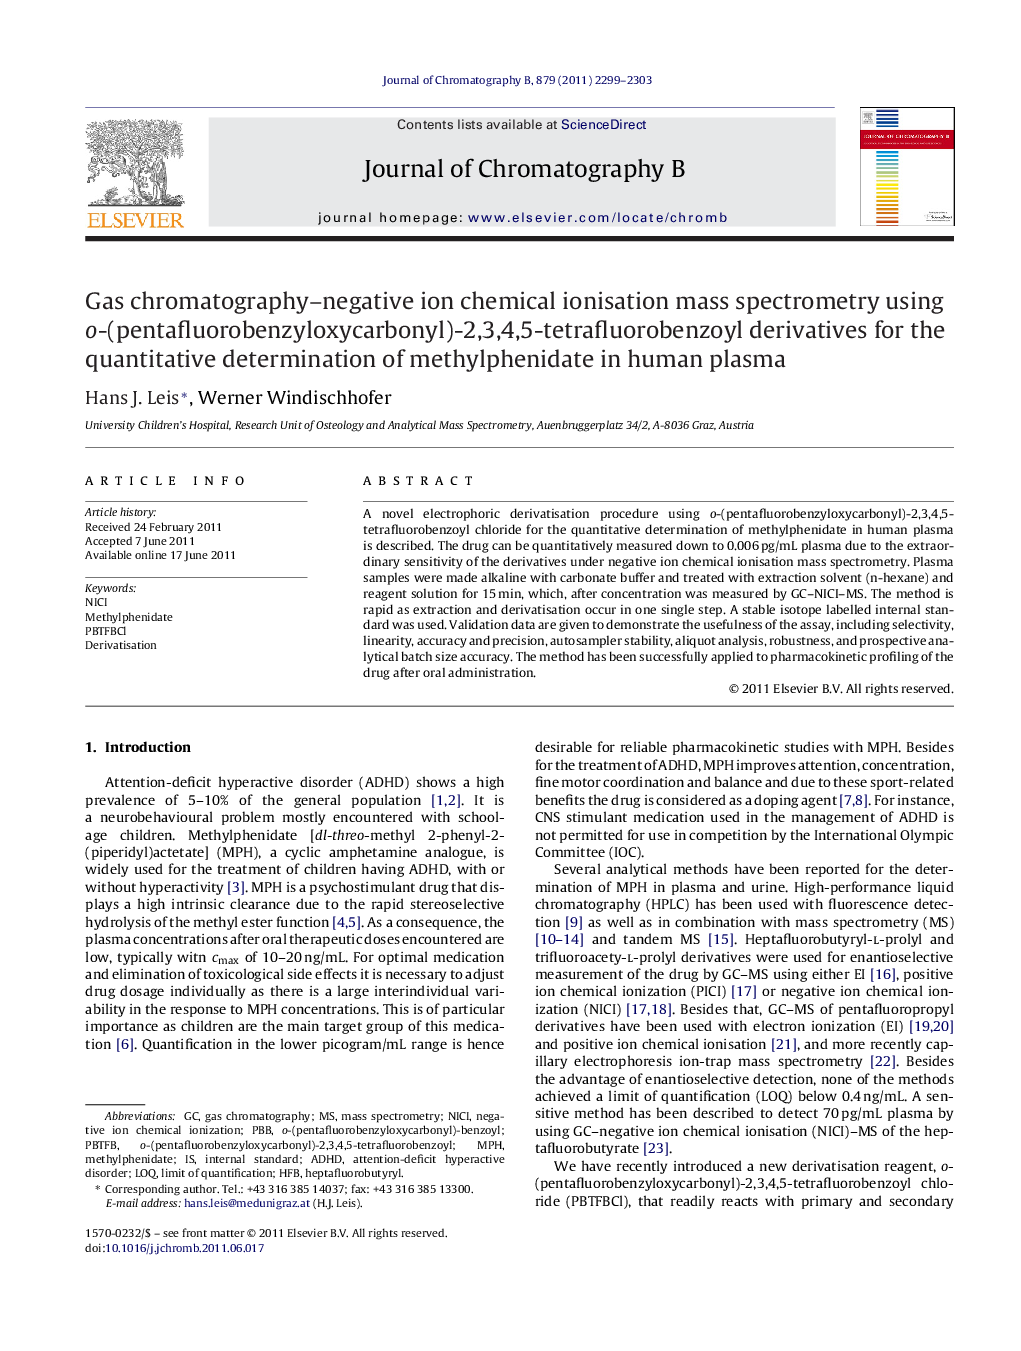 Gas chromatography–negative ion chemical ionisation mass spectrometry using o-(pentafluorobenzyloxycarbonyl)-2,3,4,5-tetrafluorobenzoyl derivatives for the quantitative determination of methylphenidate in human plasma